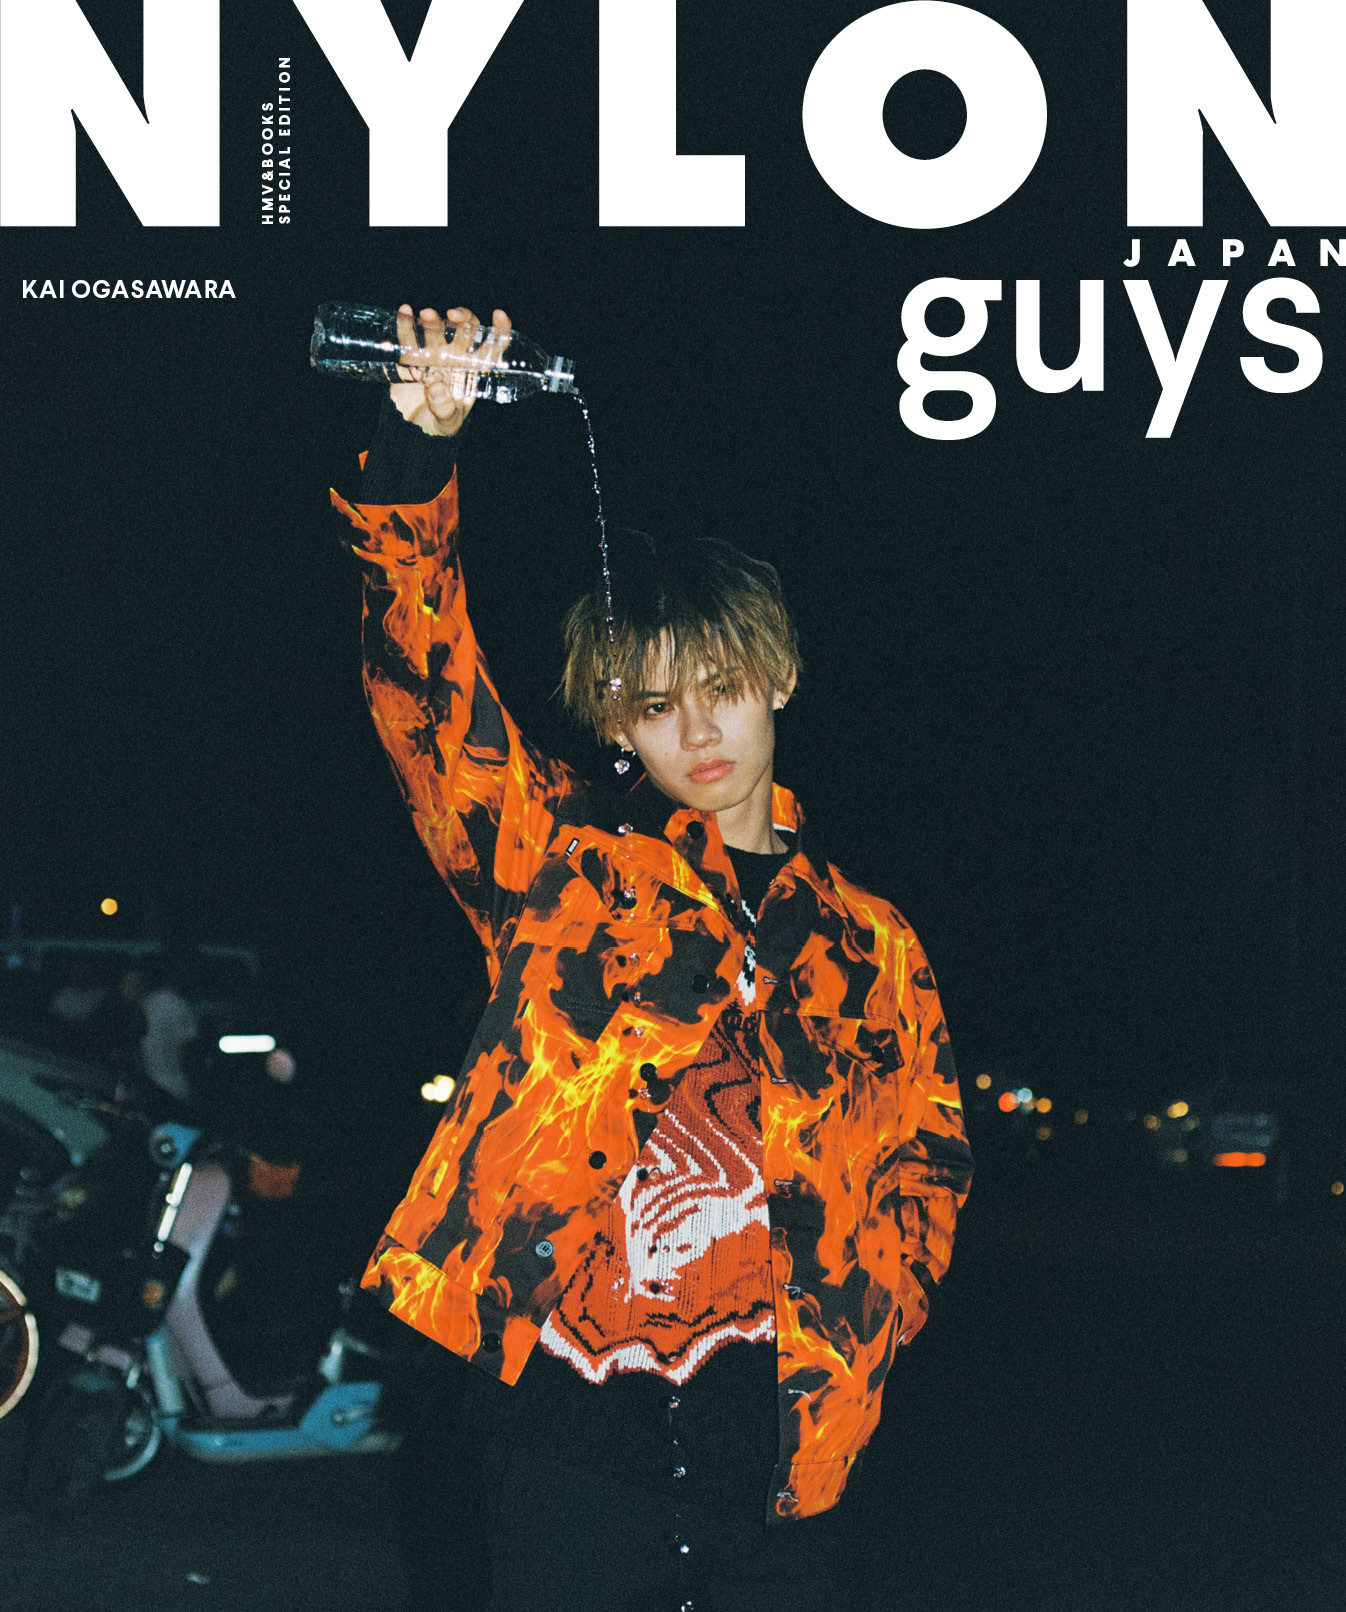 FASHION] NYLON guys JAPANのスタイルブック 《超特急 カイ 